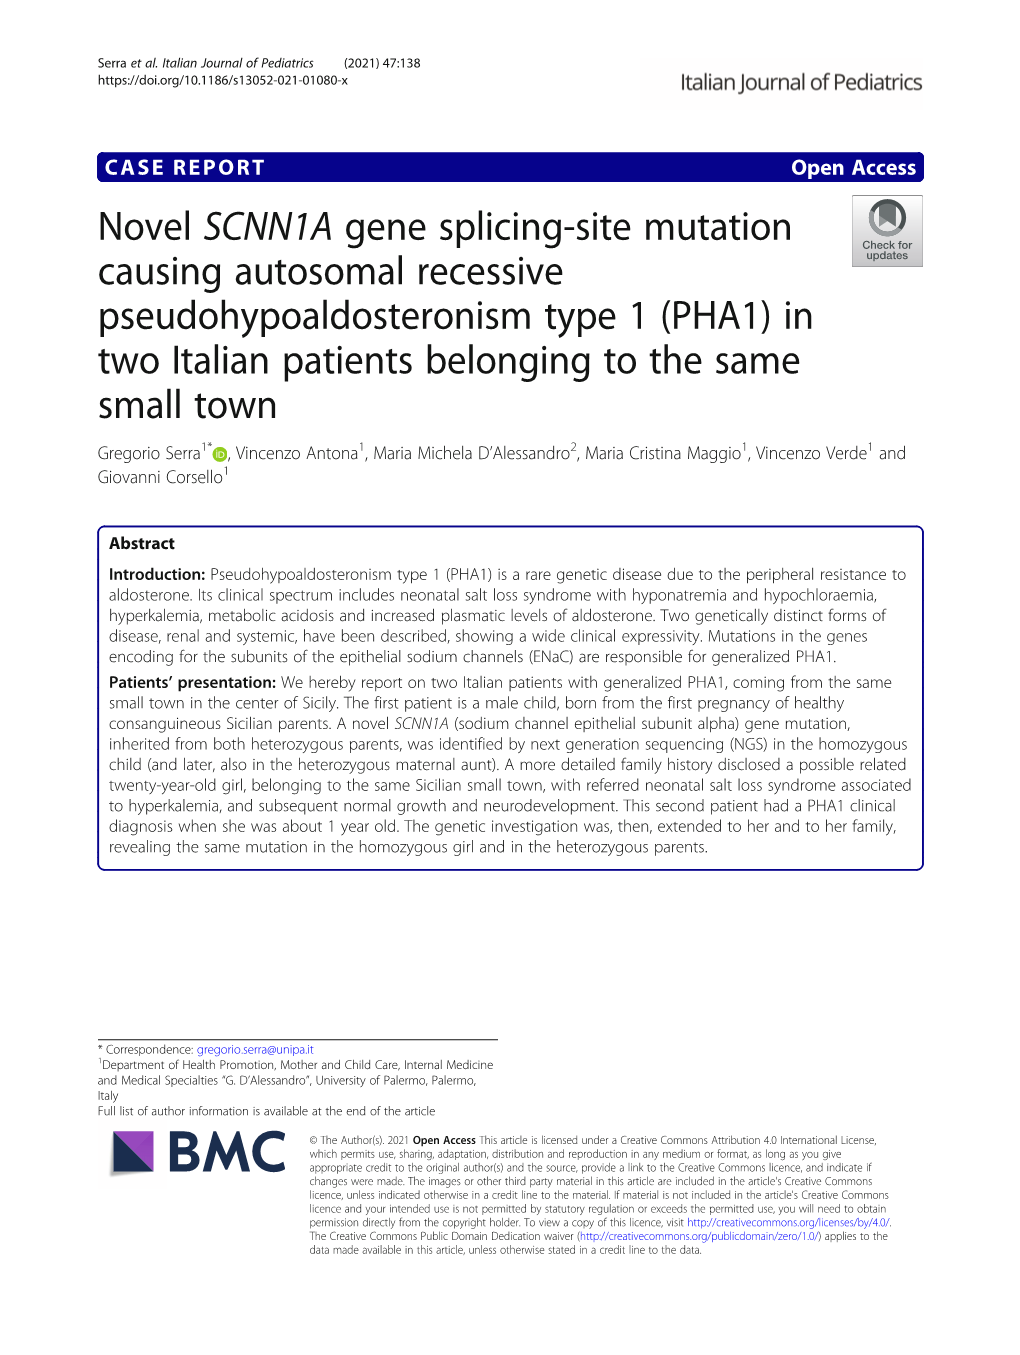 Novel SCNN1A Gene Splicing-Site